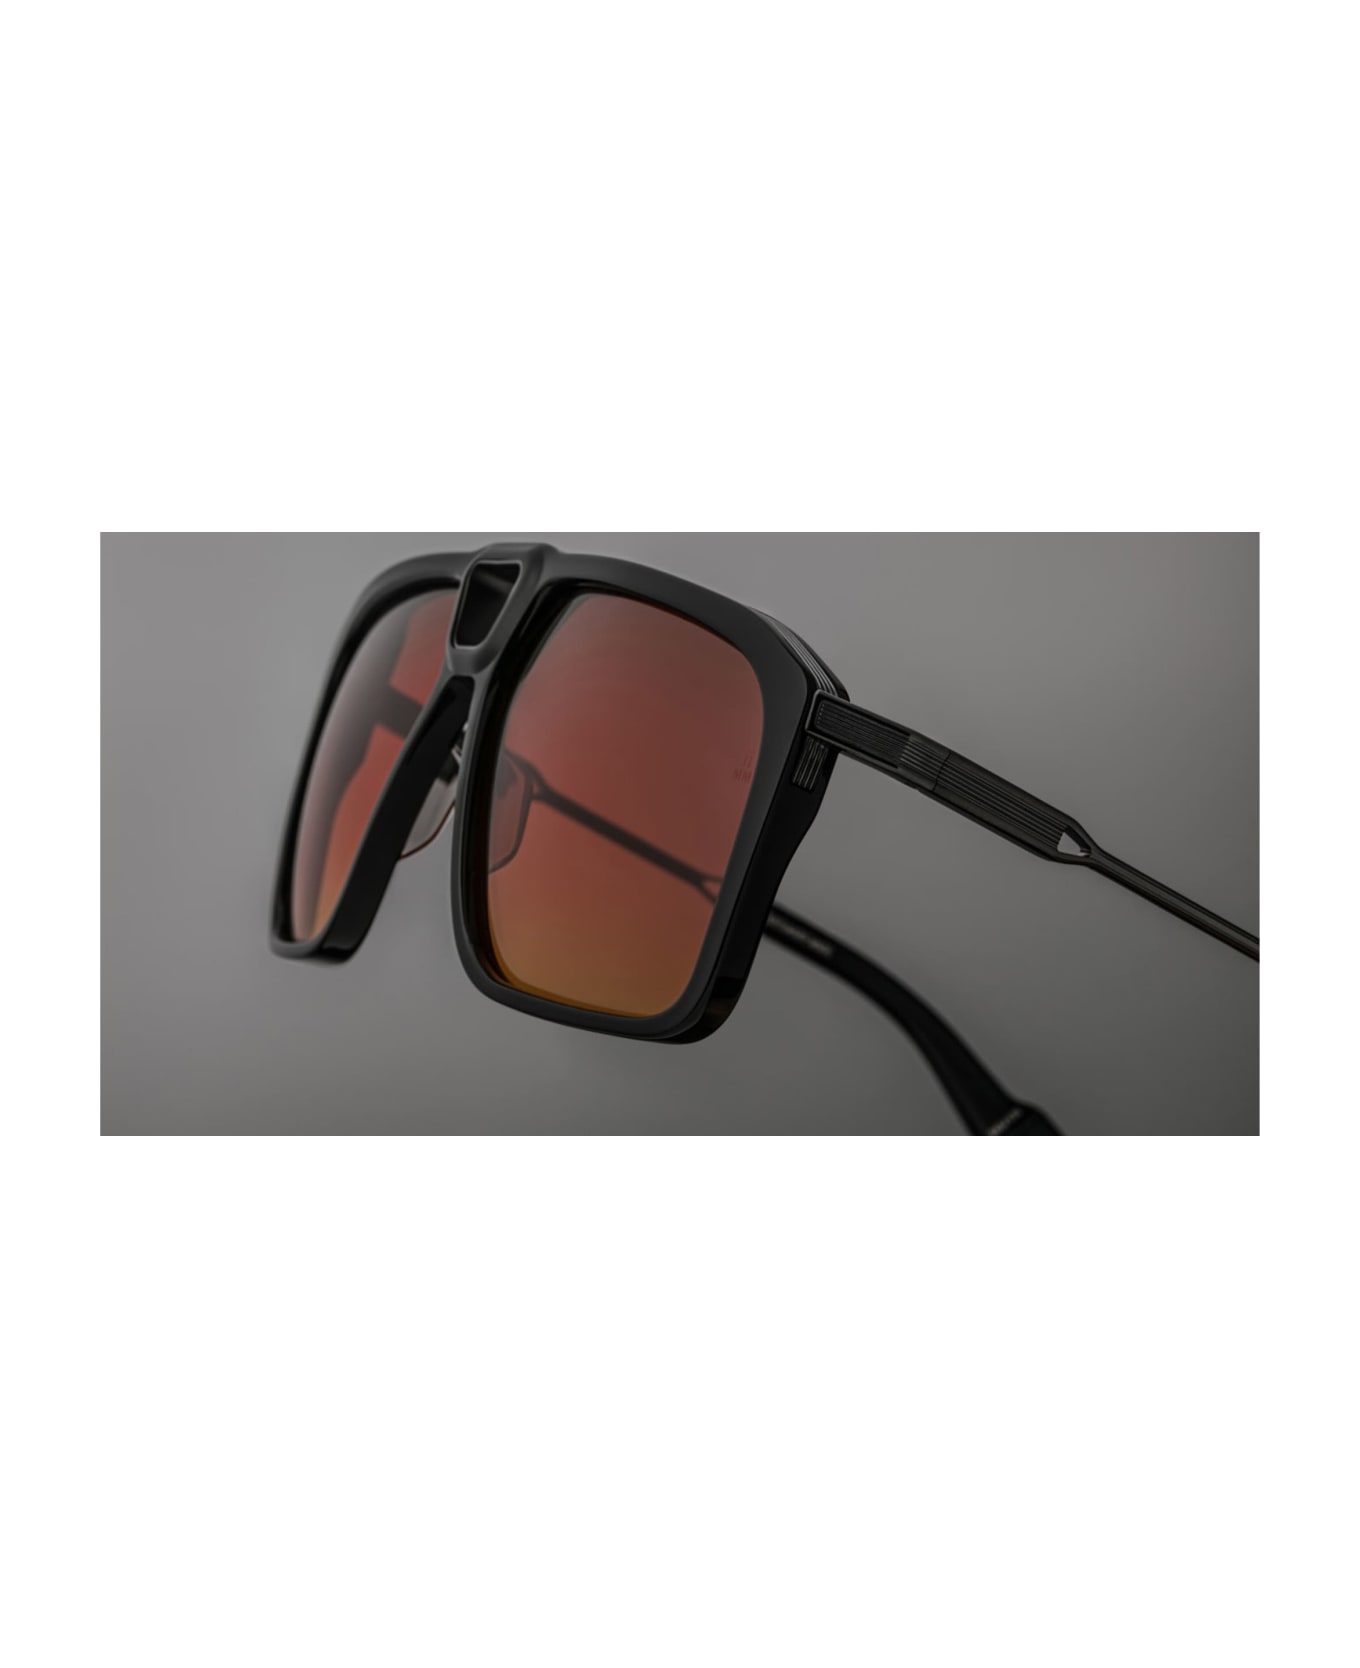 Loewe Gold Square Sunglasses Savoy - Tropic Sunglasses - Black